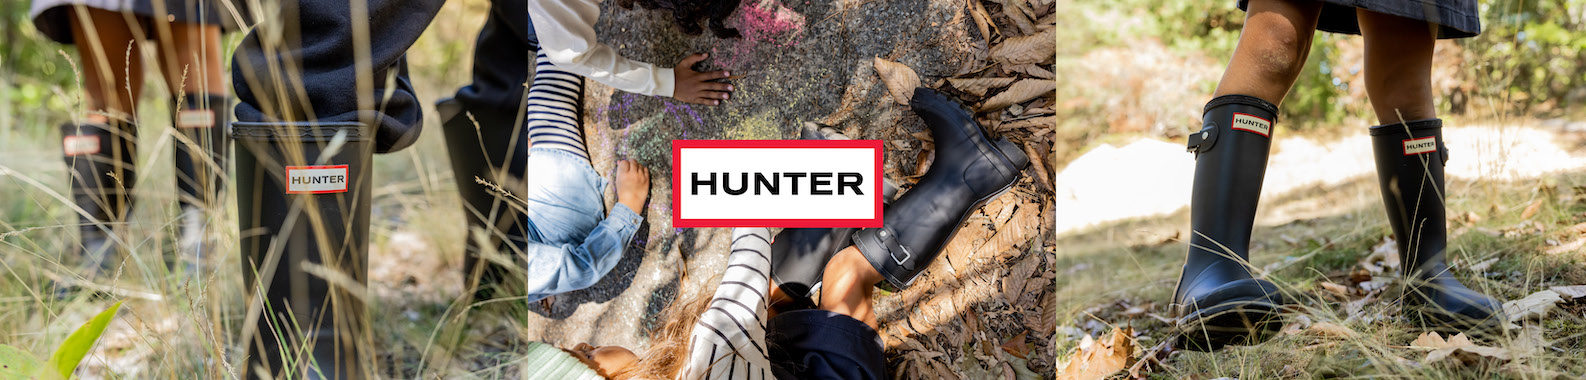 Hunter brand header image